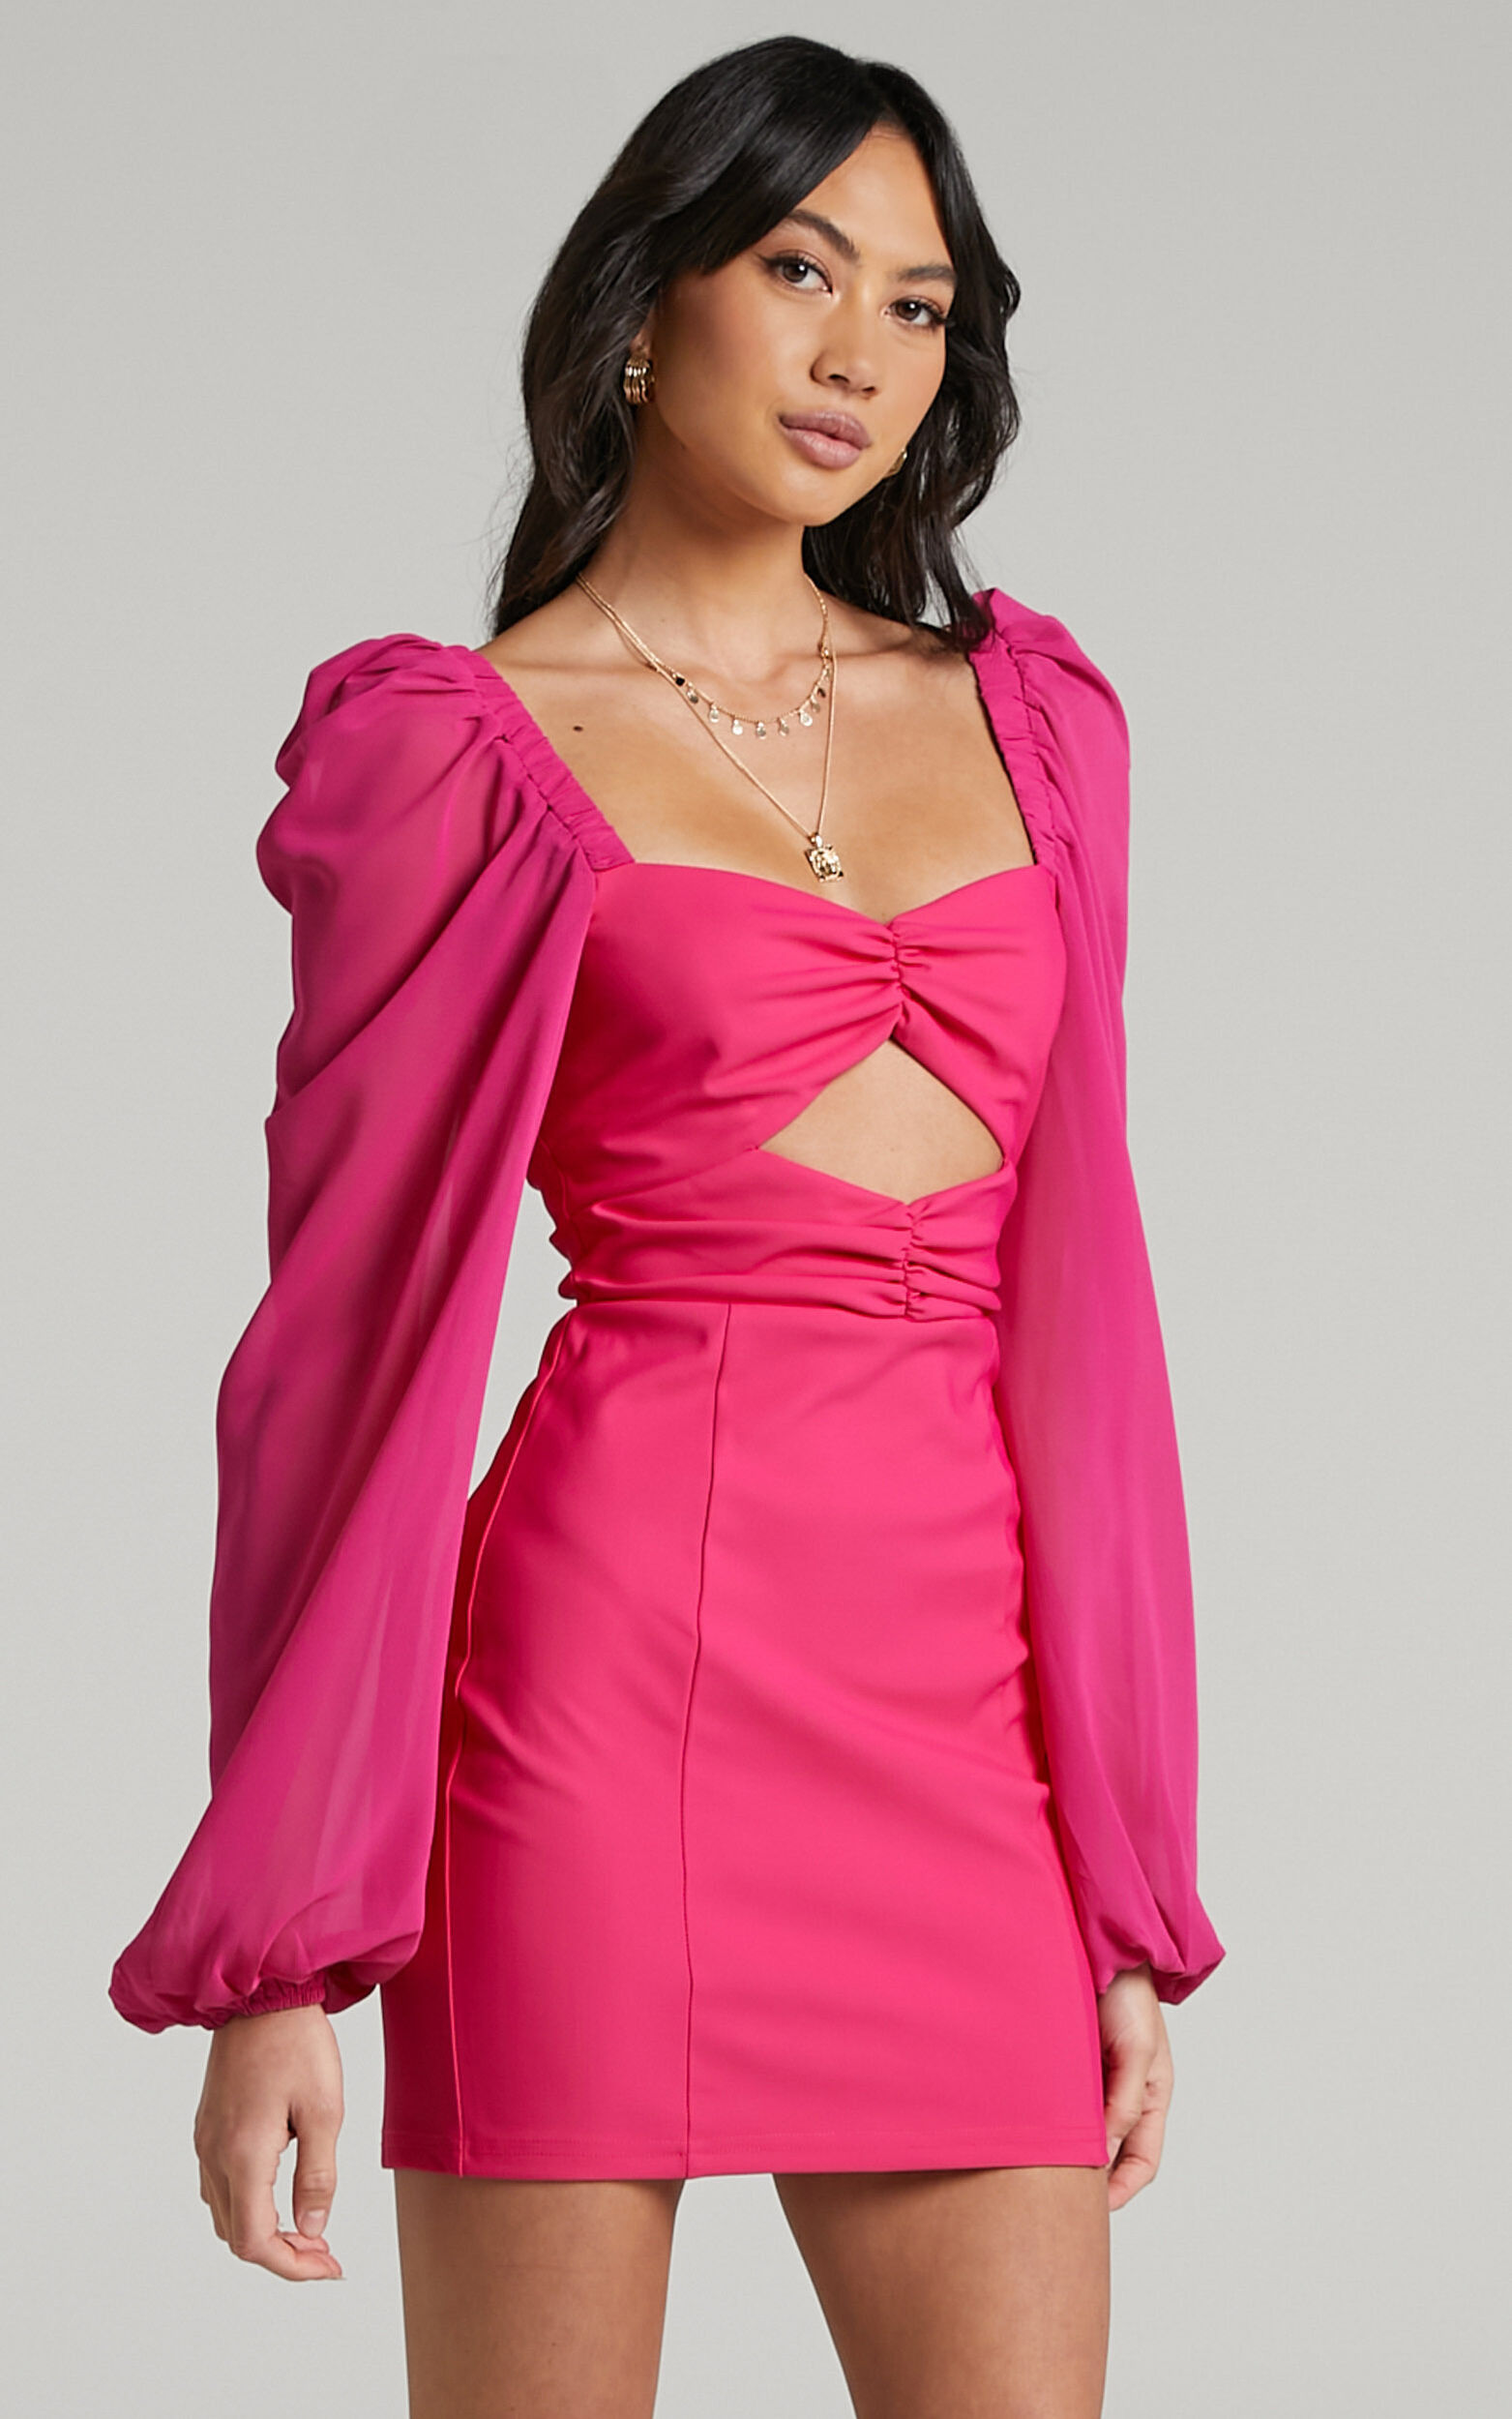 Lilian Chiffon Sleeve Cut Out Mini Dress in Pink - 06, PNK2